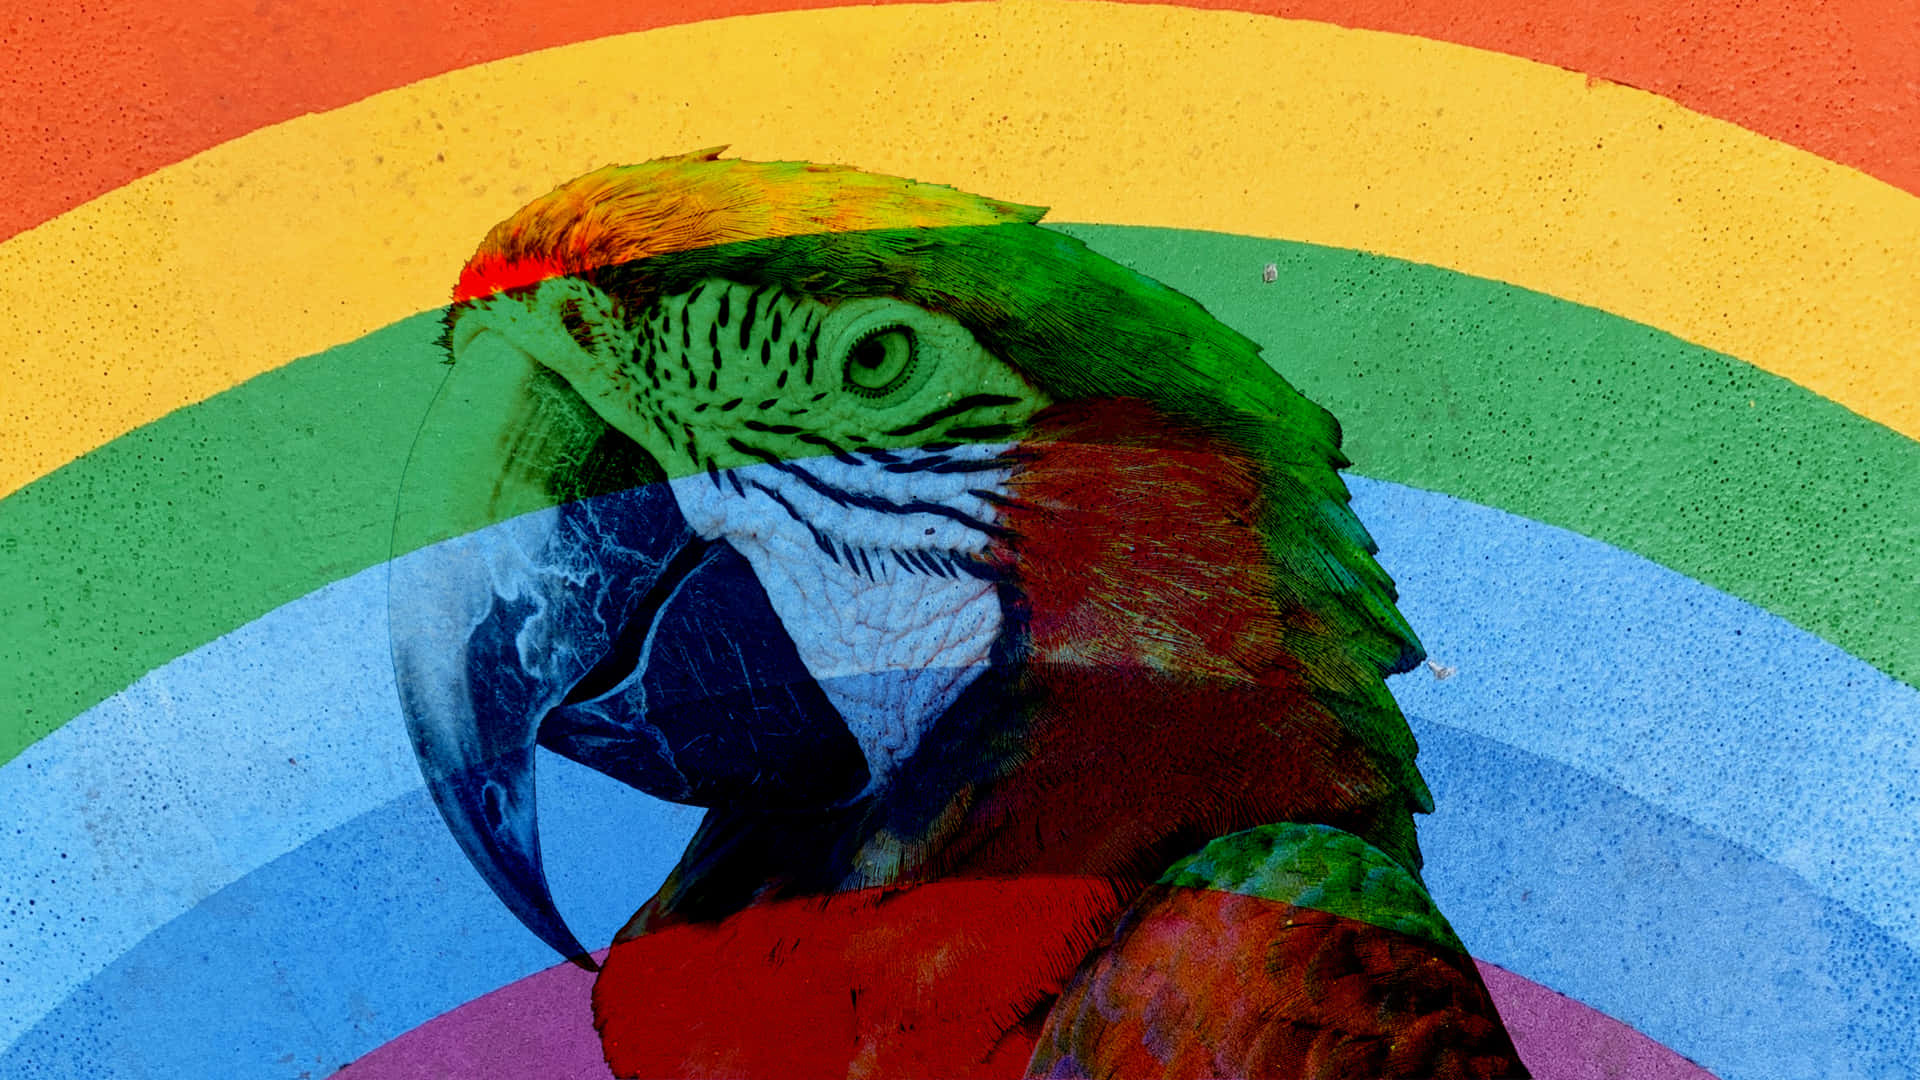 Rainbow Over Parrot Wallpaper